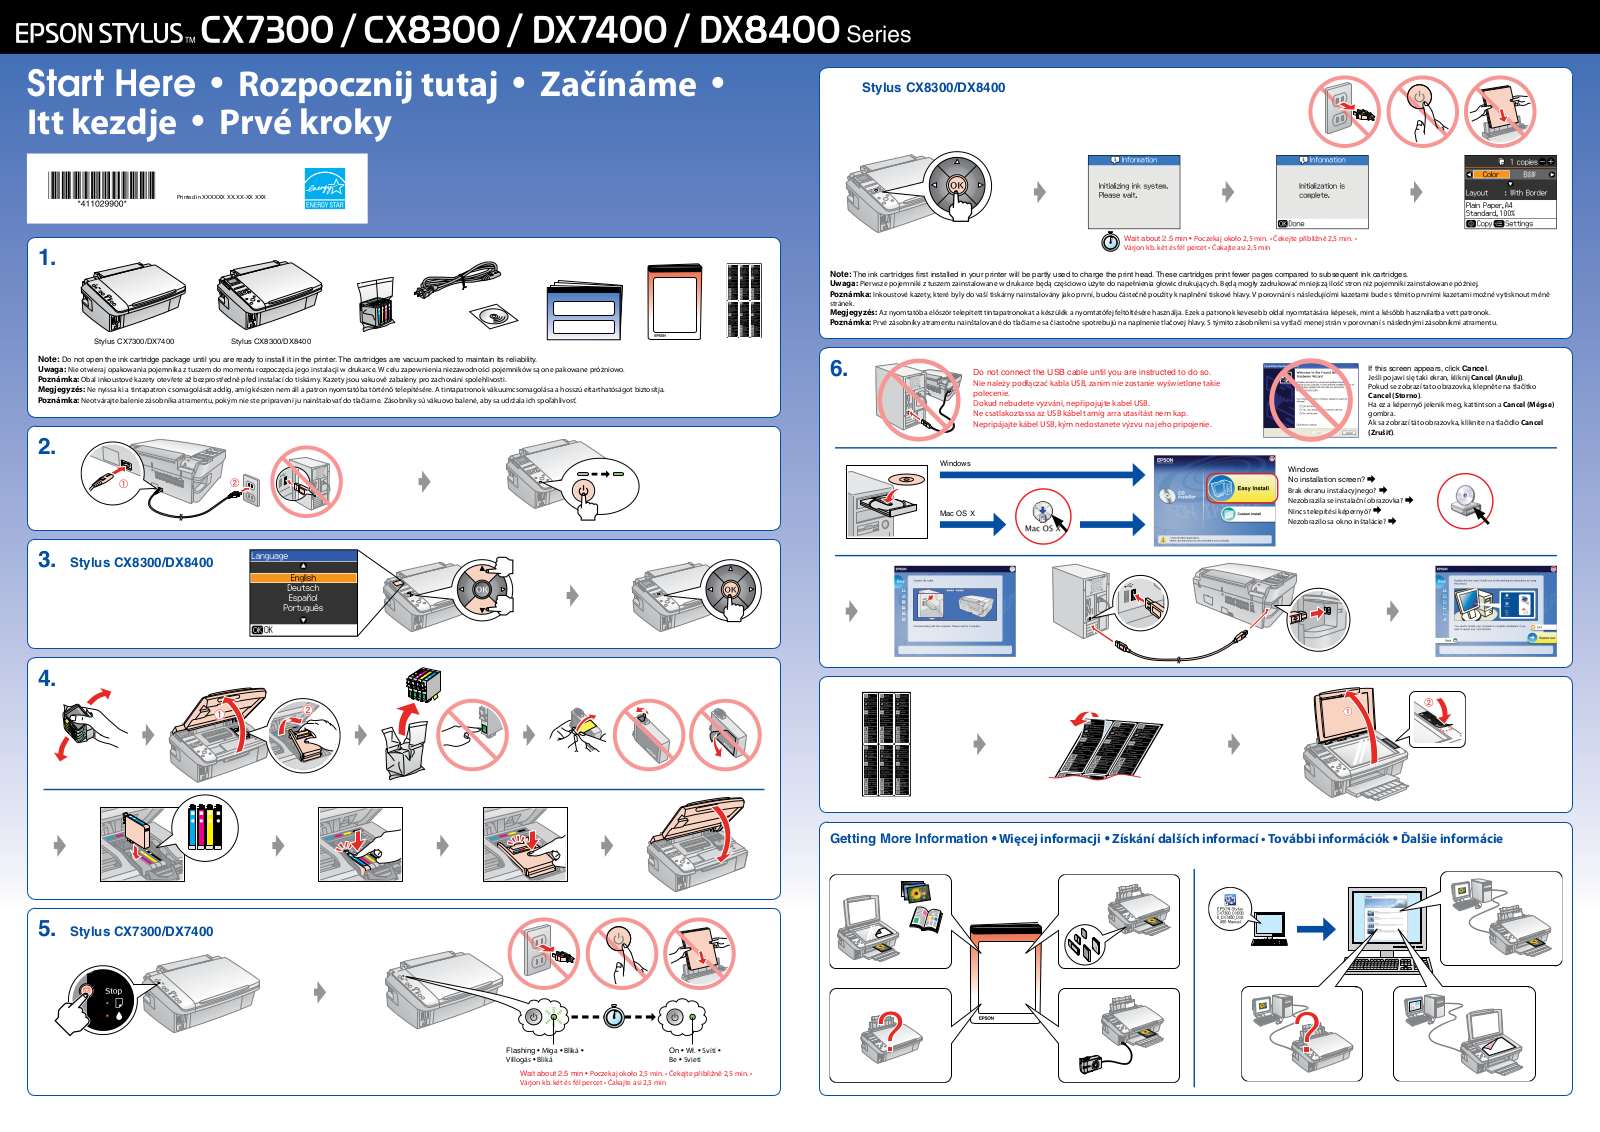 EPSON CX7300 User Manual